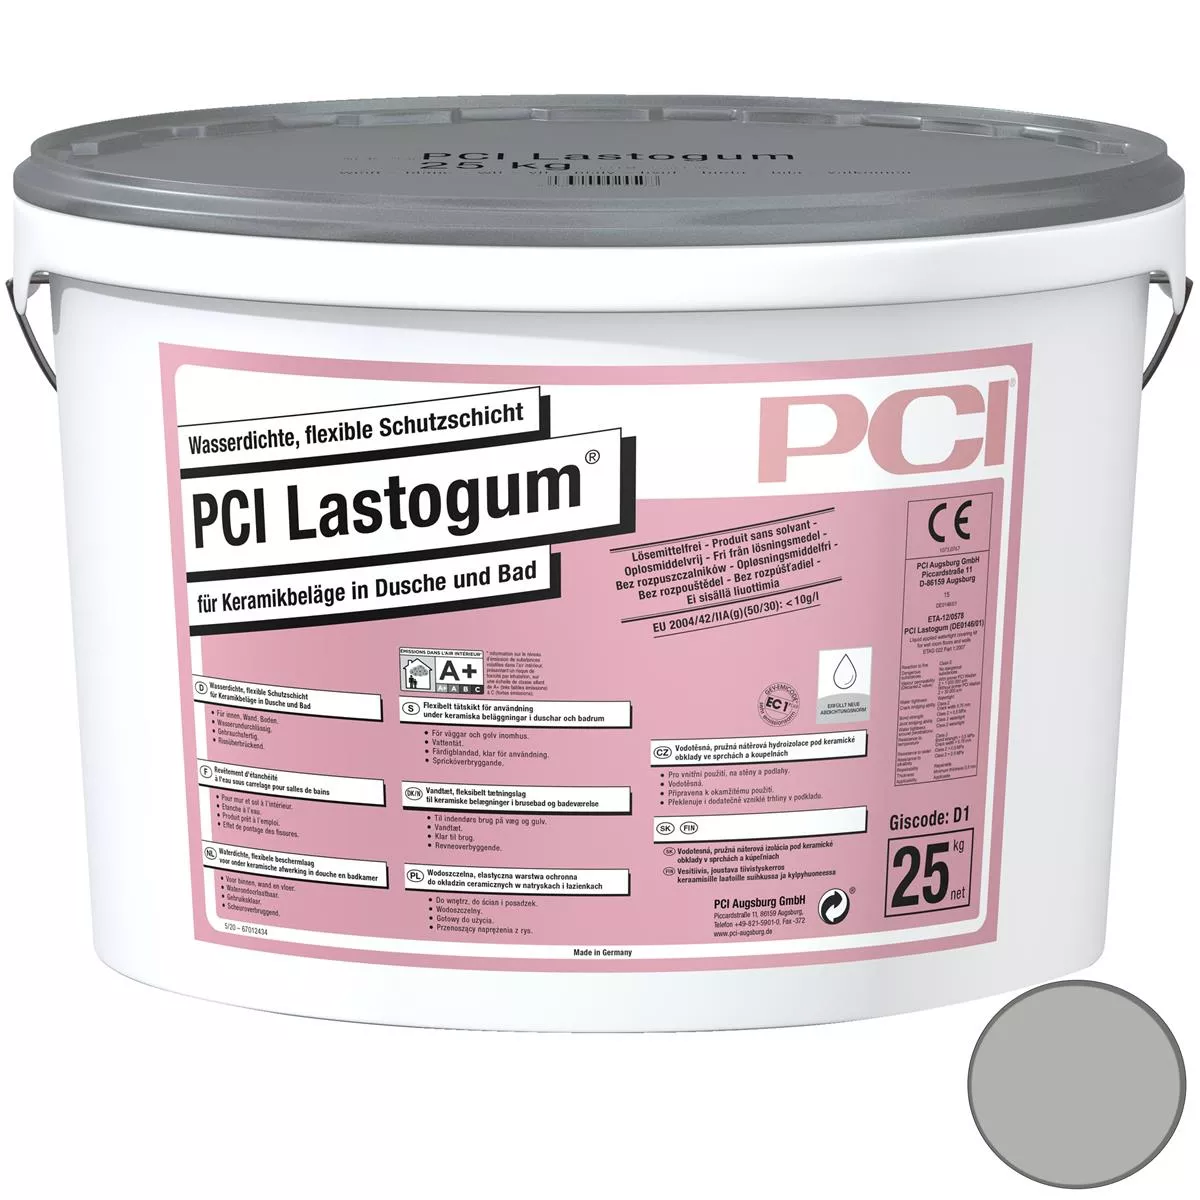 PCI Lastogum Waterproof Flexible Protective Layer Grey 25KG